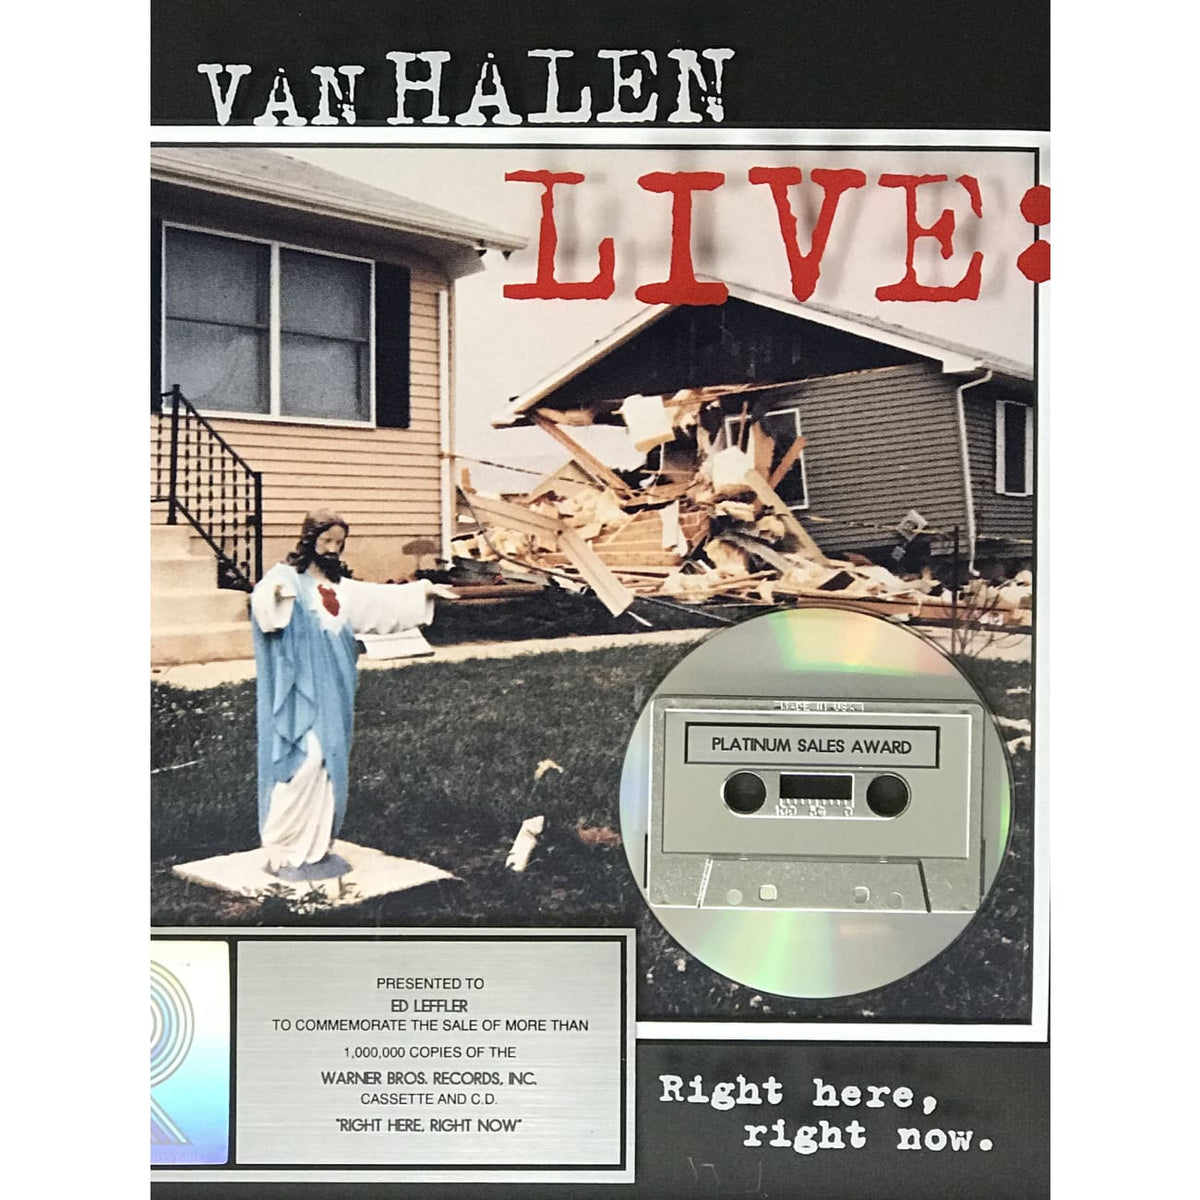 Van Halen Live Right Here Right Now RIAA Platinum Album Award